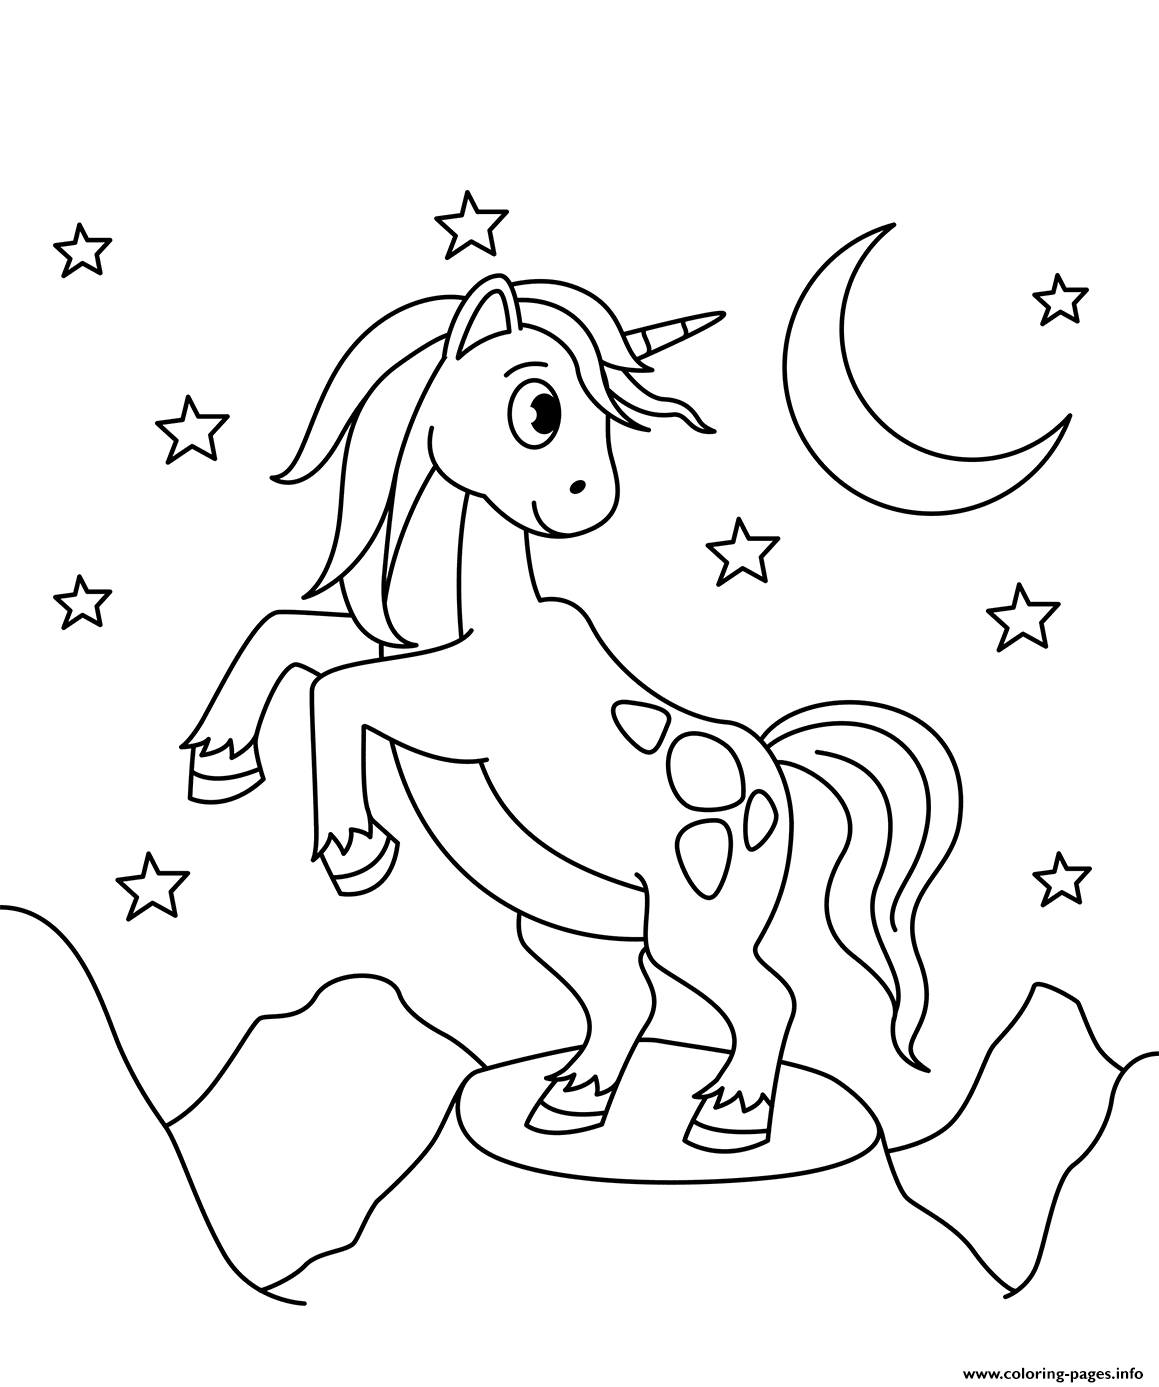 Midnight Unicorn coloring